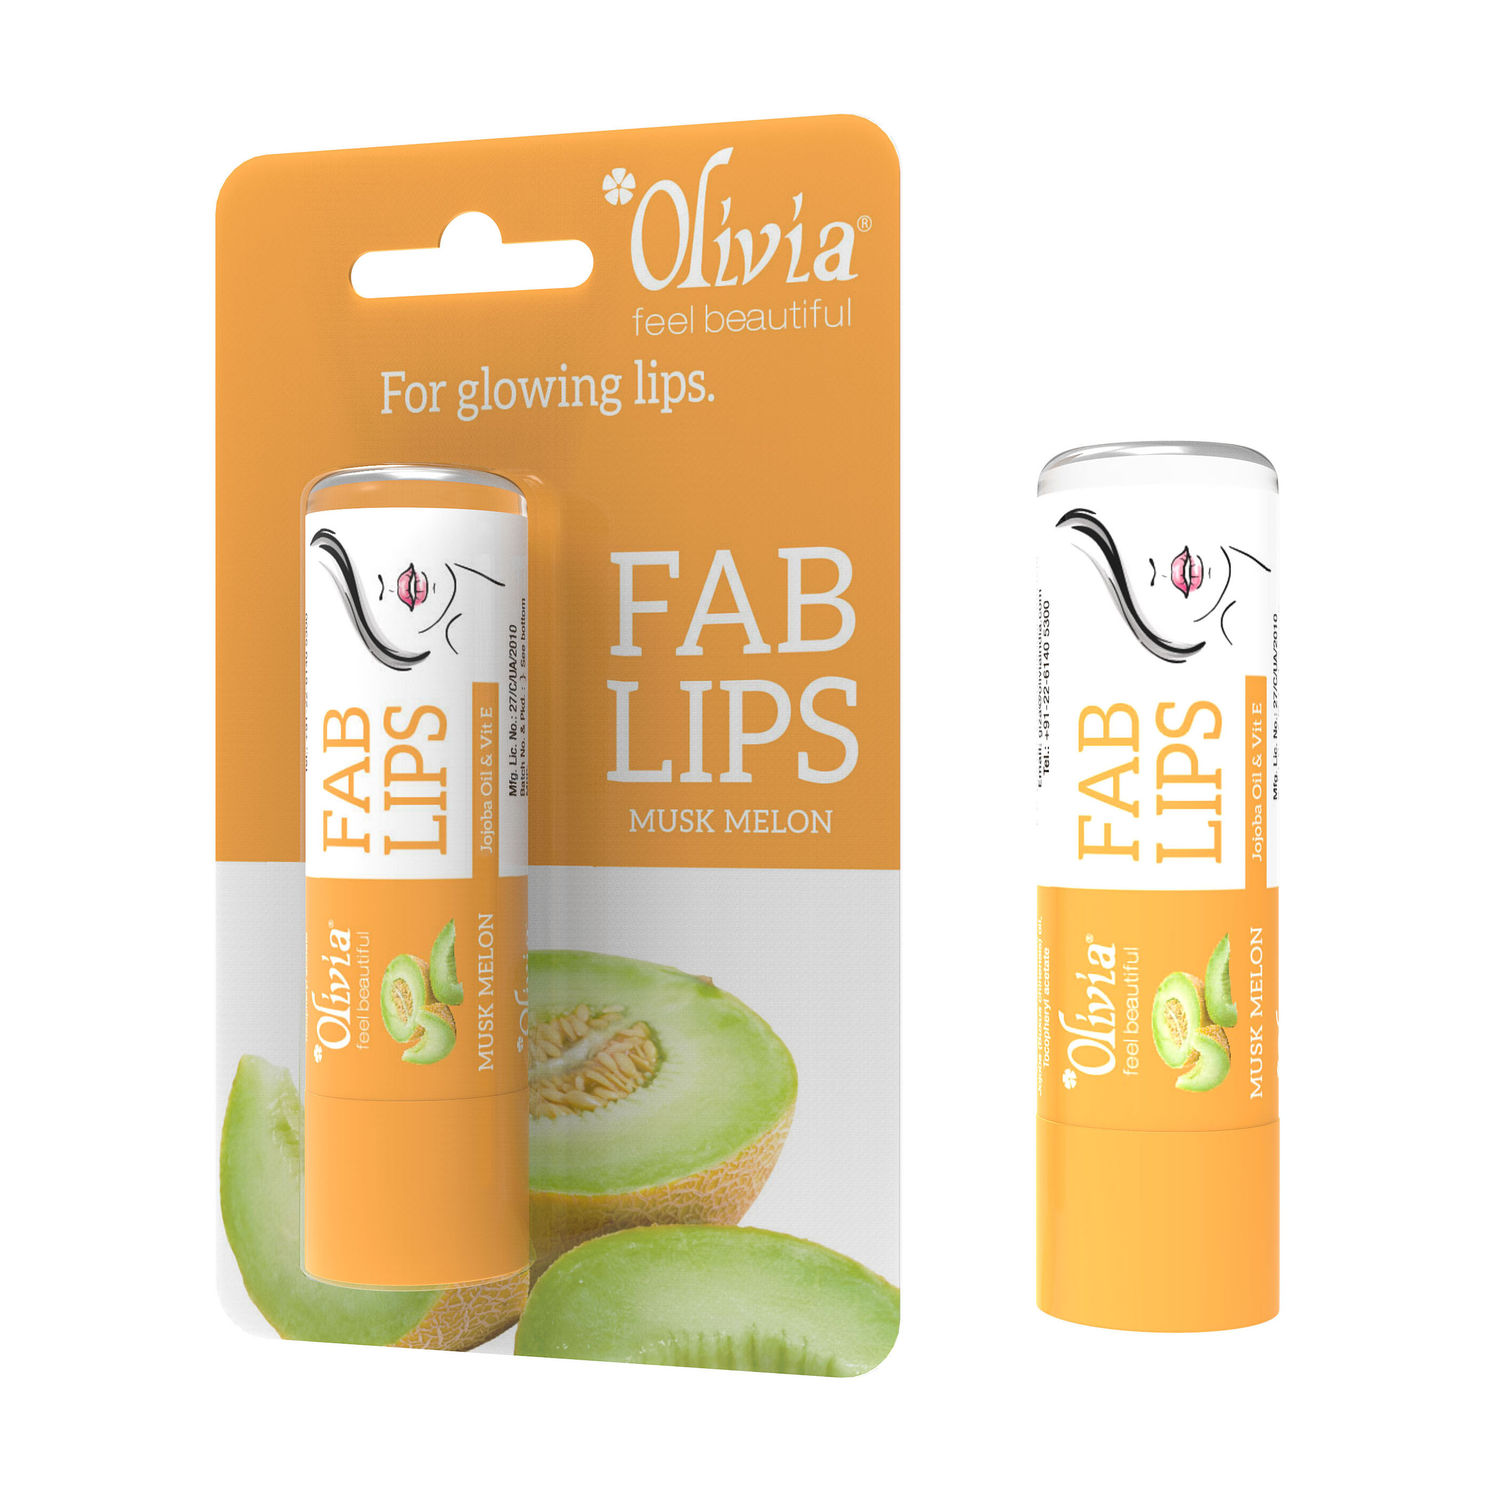 Buy Olivia Musk Melon Fab Lip Balm Jojoba Oil & Vitamin E for Glowing Lips (4.3 g) - Purplle